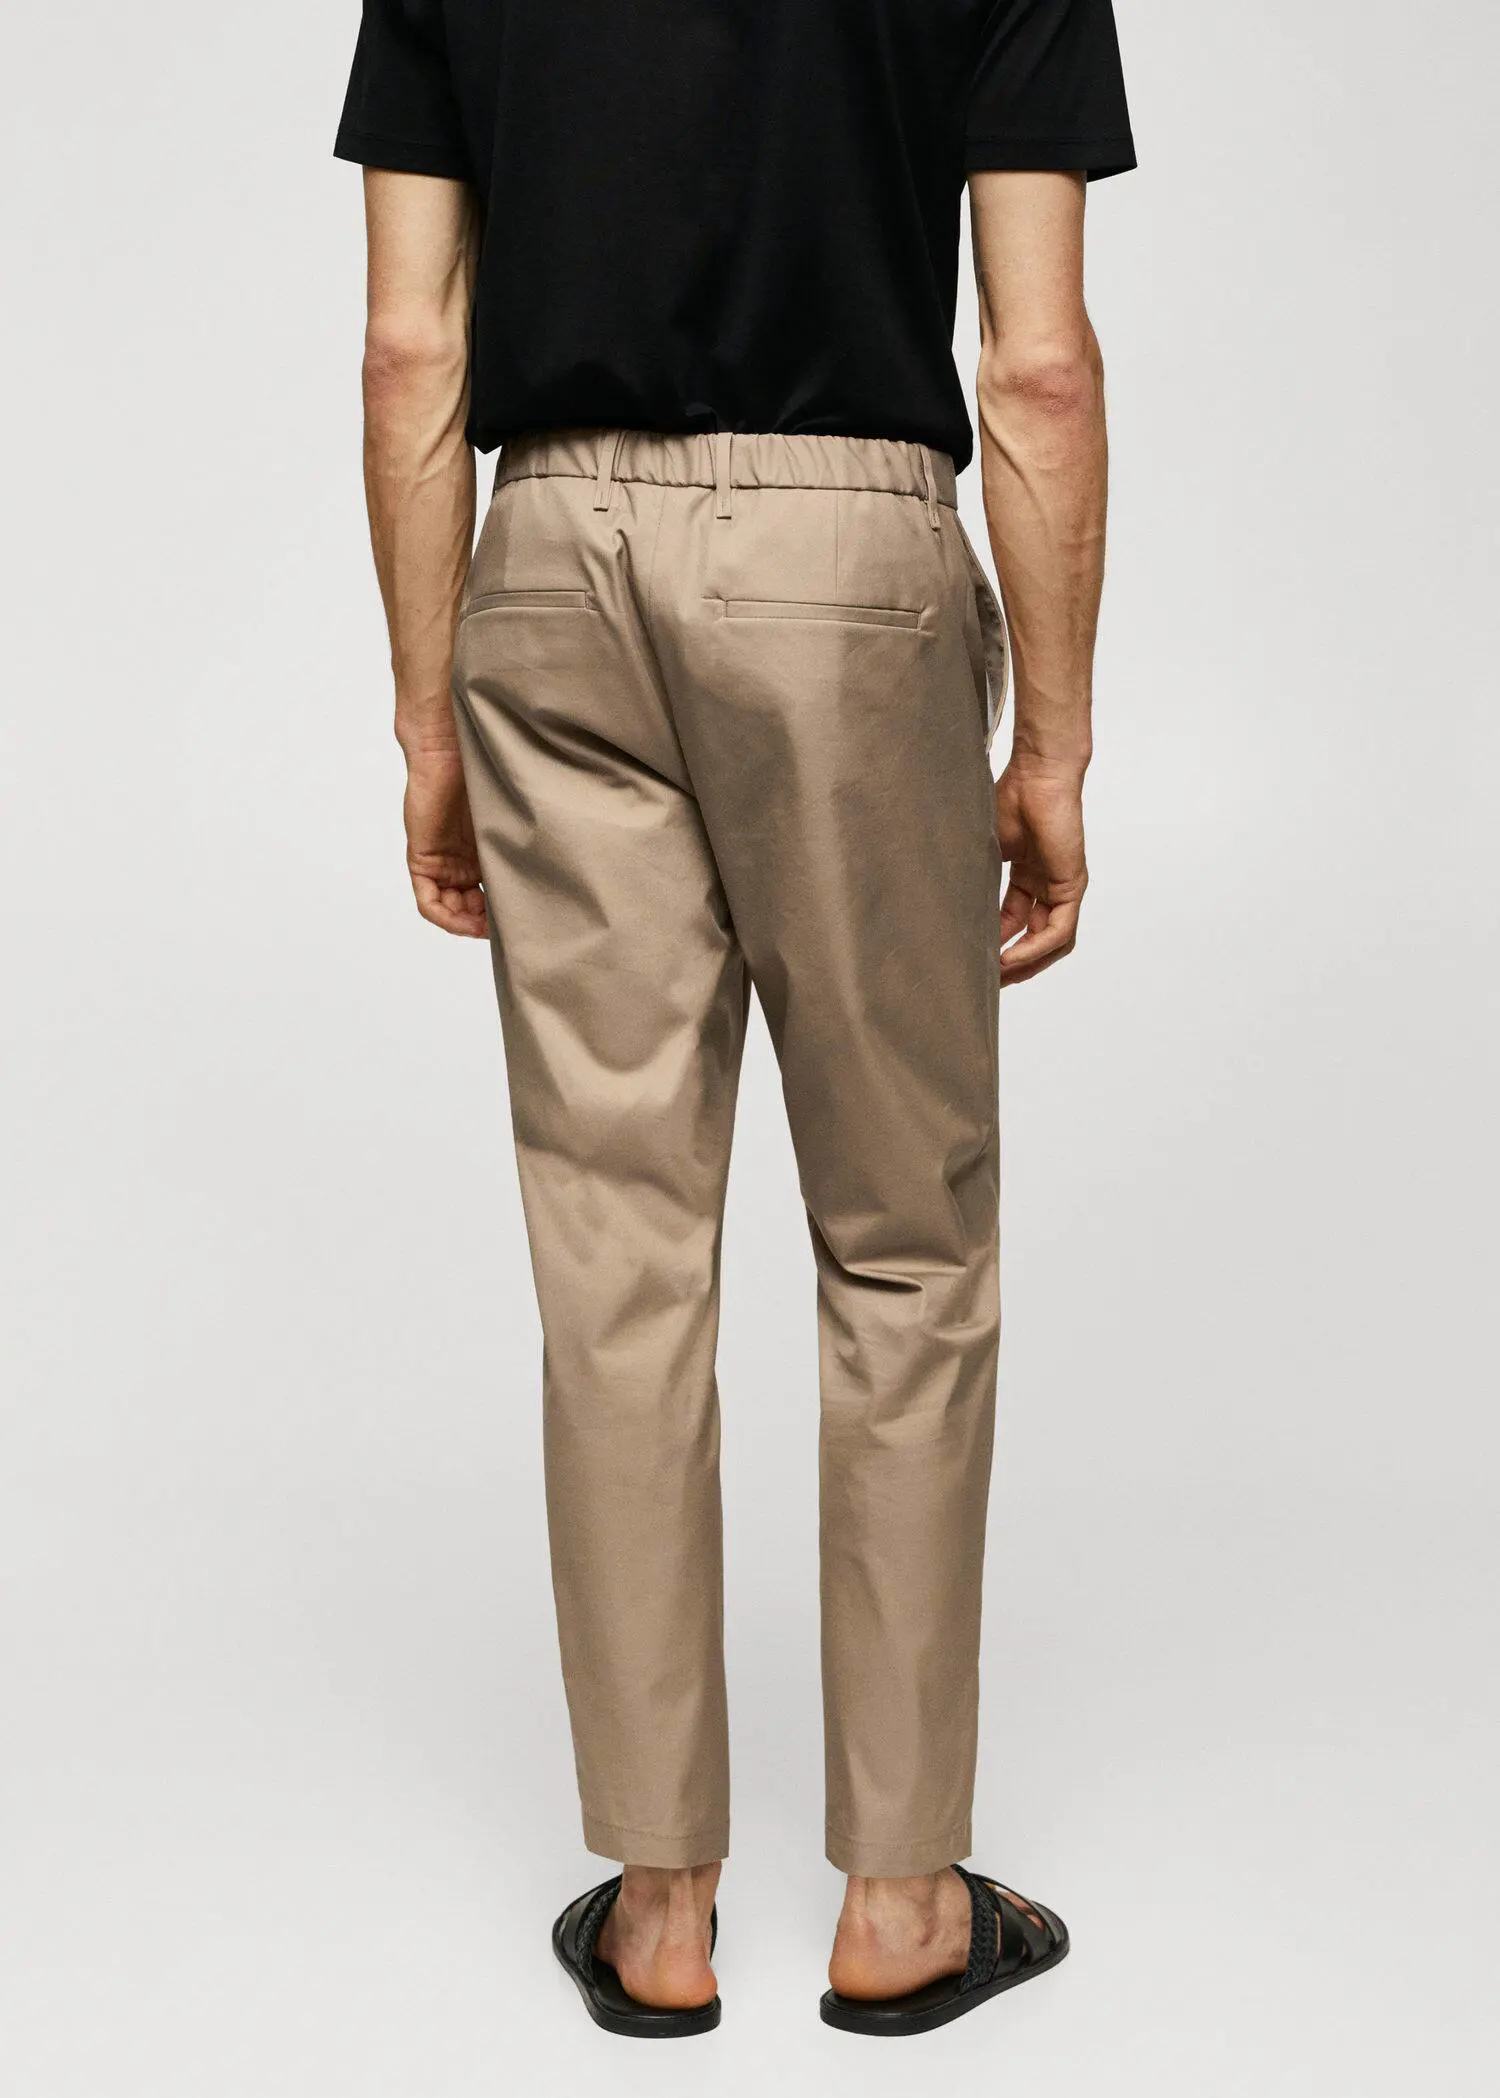 Mango Slim-fit cotton pants. a man wearing a black shirt and beige pants. 